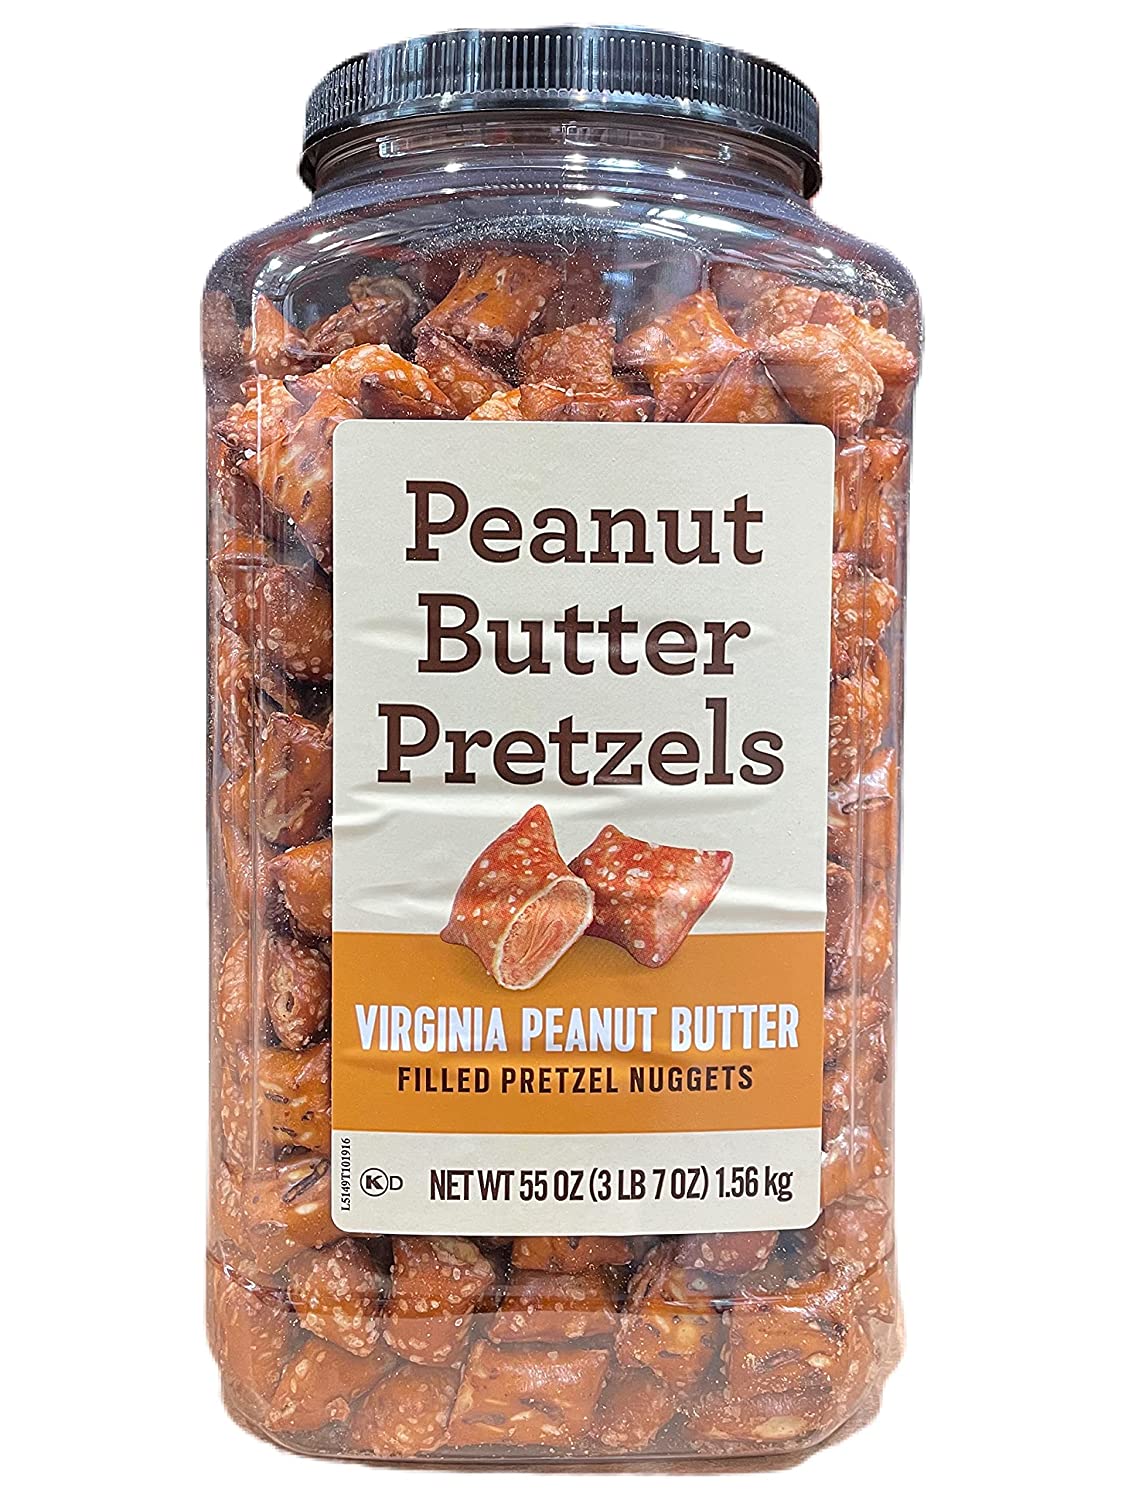 Virginia Peanut Butter Filled Pretzel Nuggets